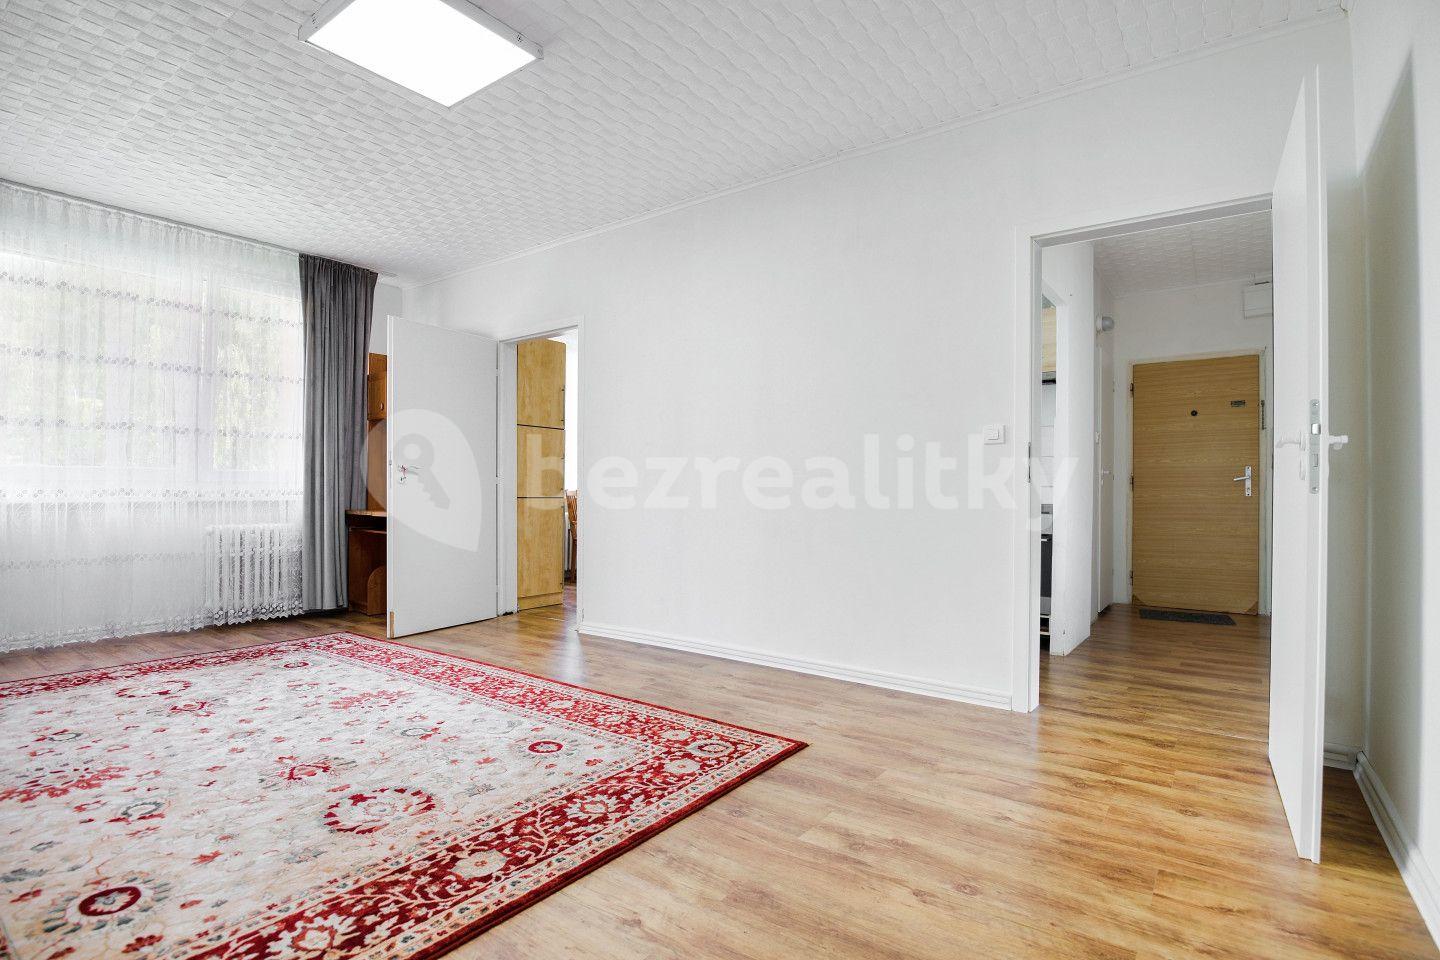 3 bedroom flat for sale, 82 m², Jindřicha Plachty, Ústí nad Labem, Ústecký Region